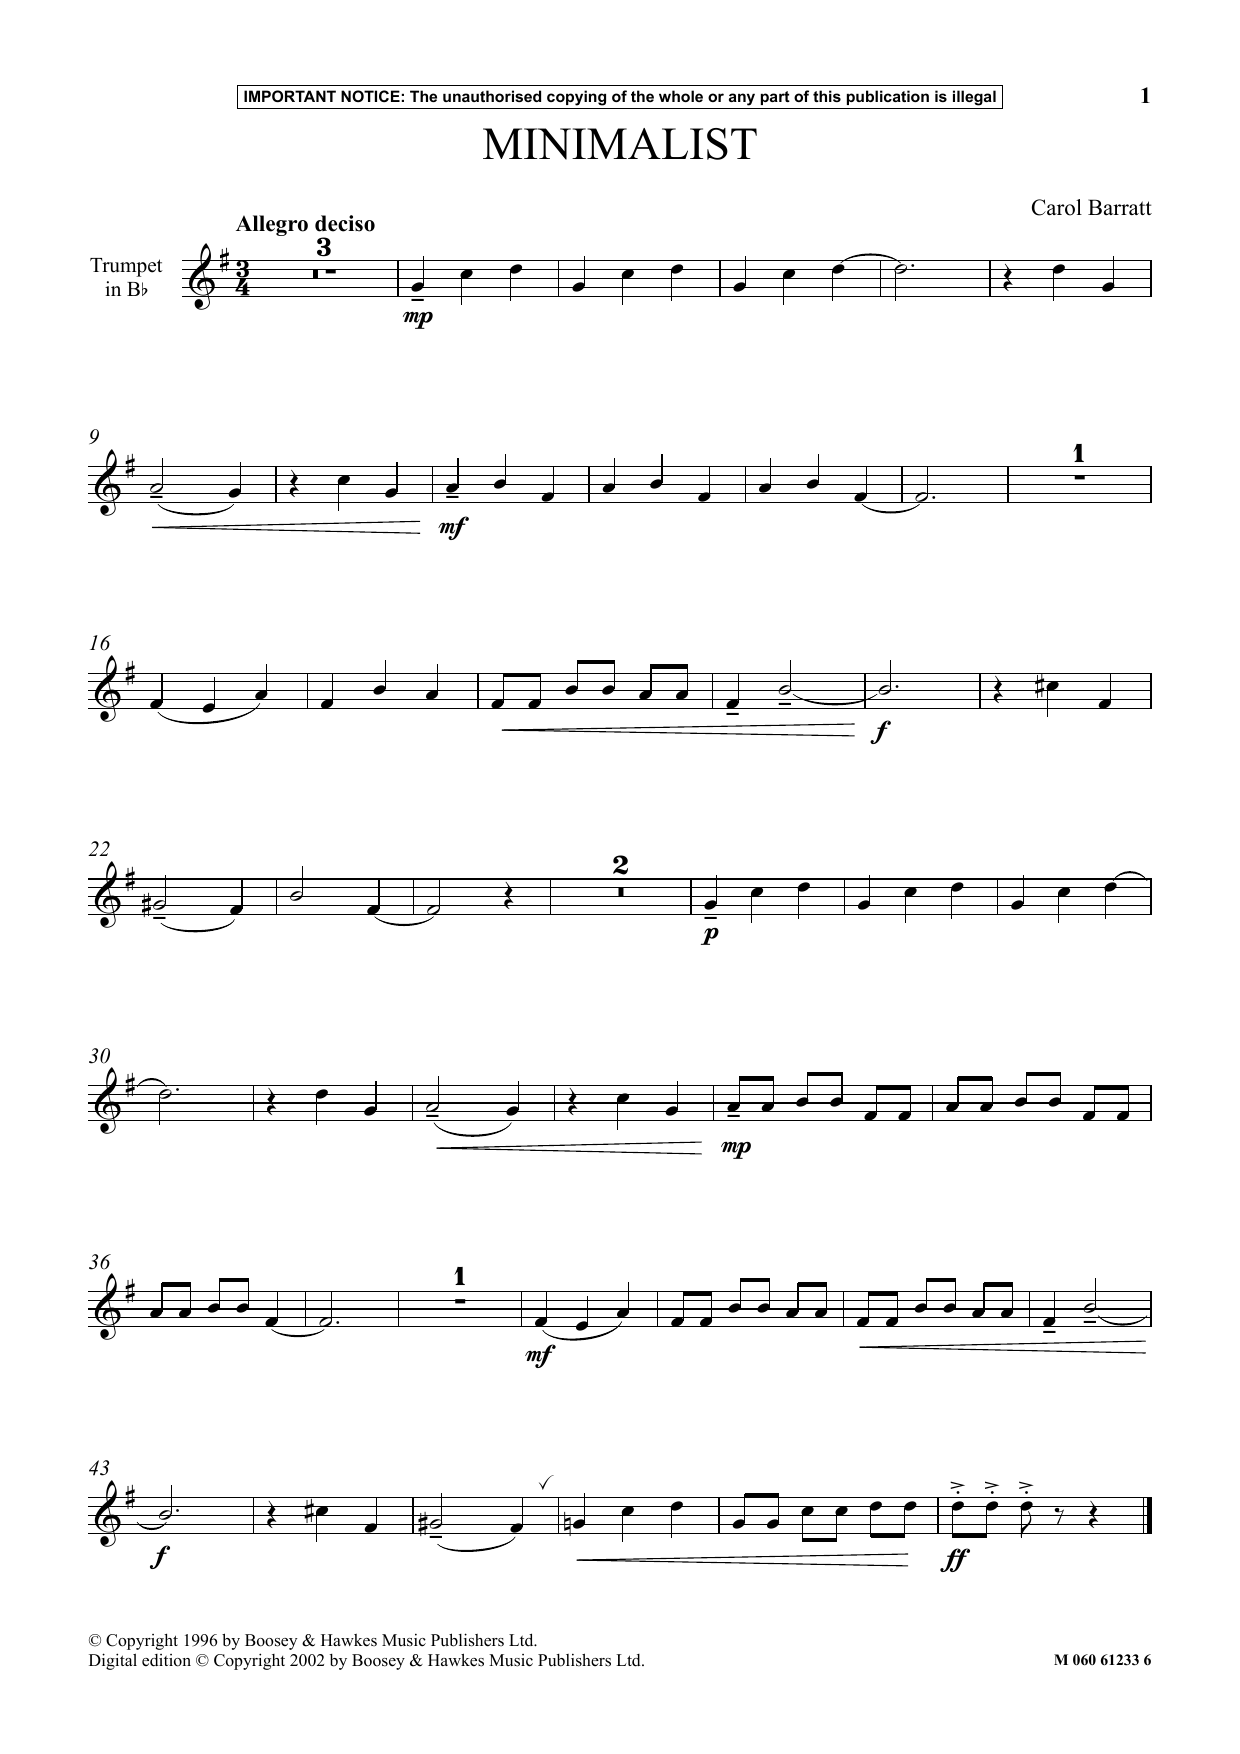 Download Carol Barratt Minimalist Sheet Music and learn how to play Instrumental Solo PDF digital score in minutes